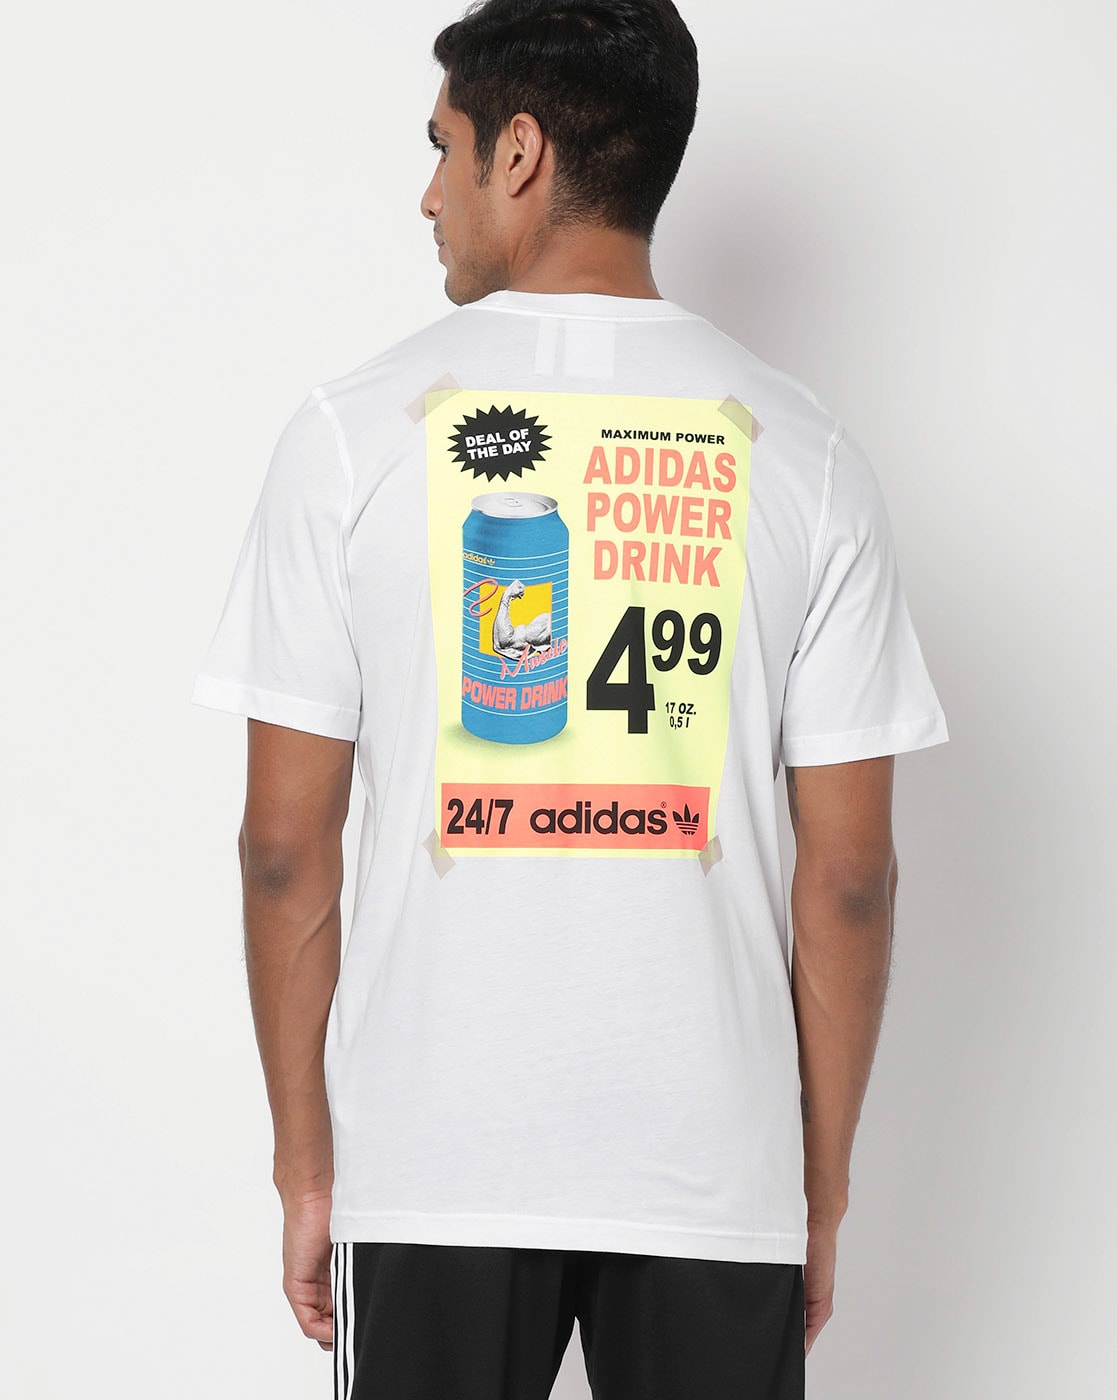 adidas power drink t shirt